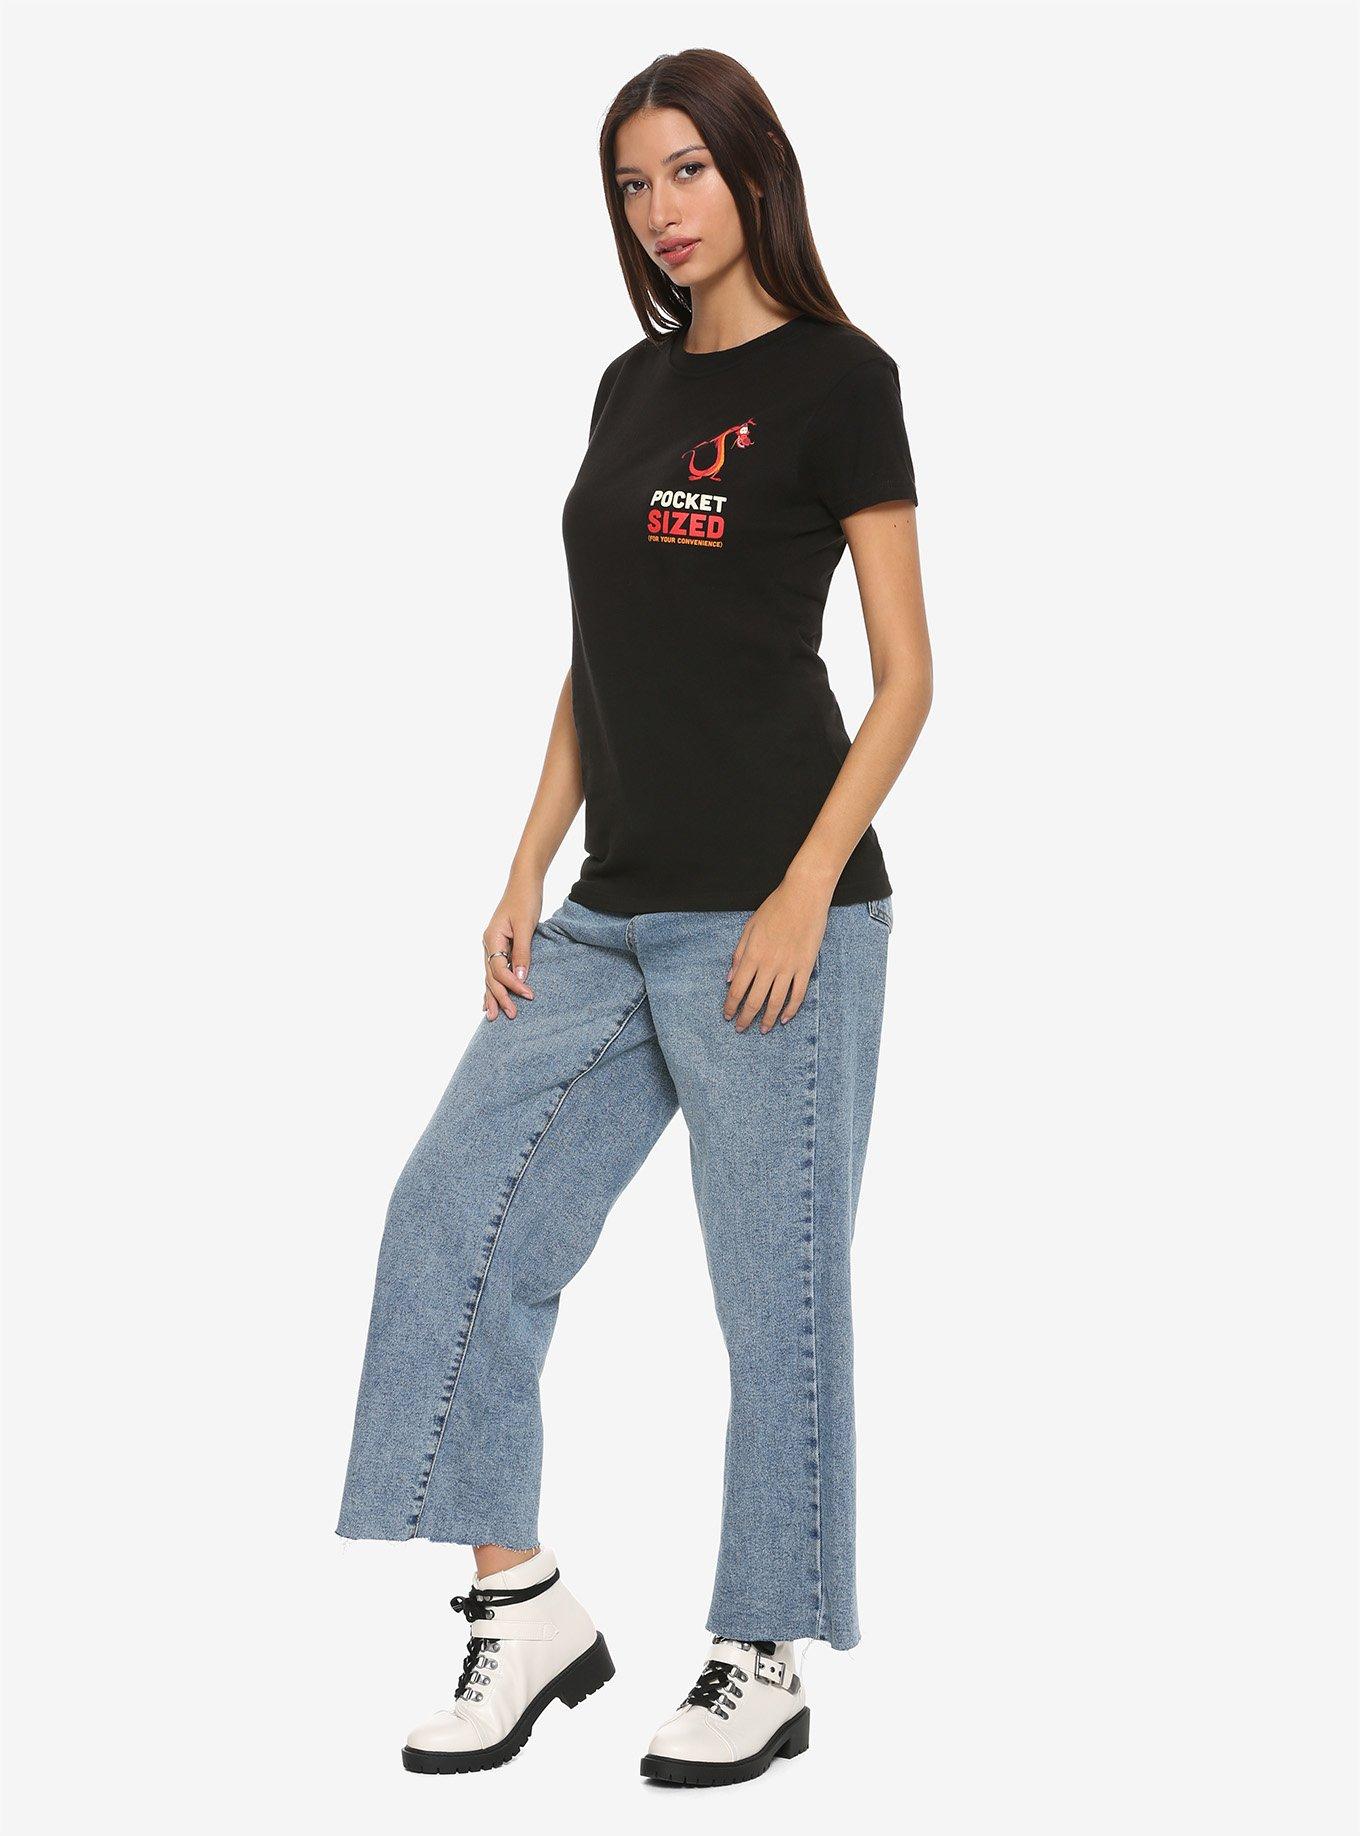 Disney Mulan Pocket Sized Mushu Girls T-shirt, , alternate